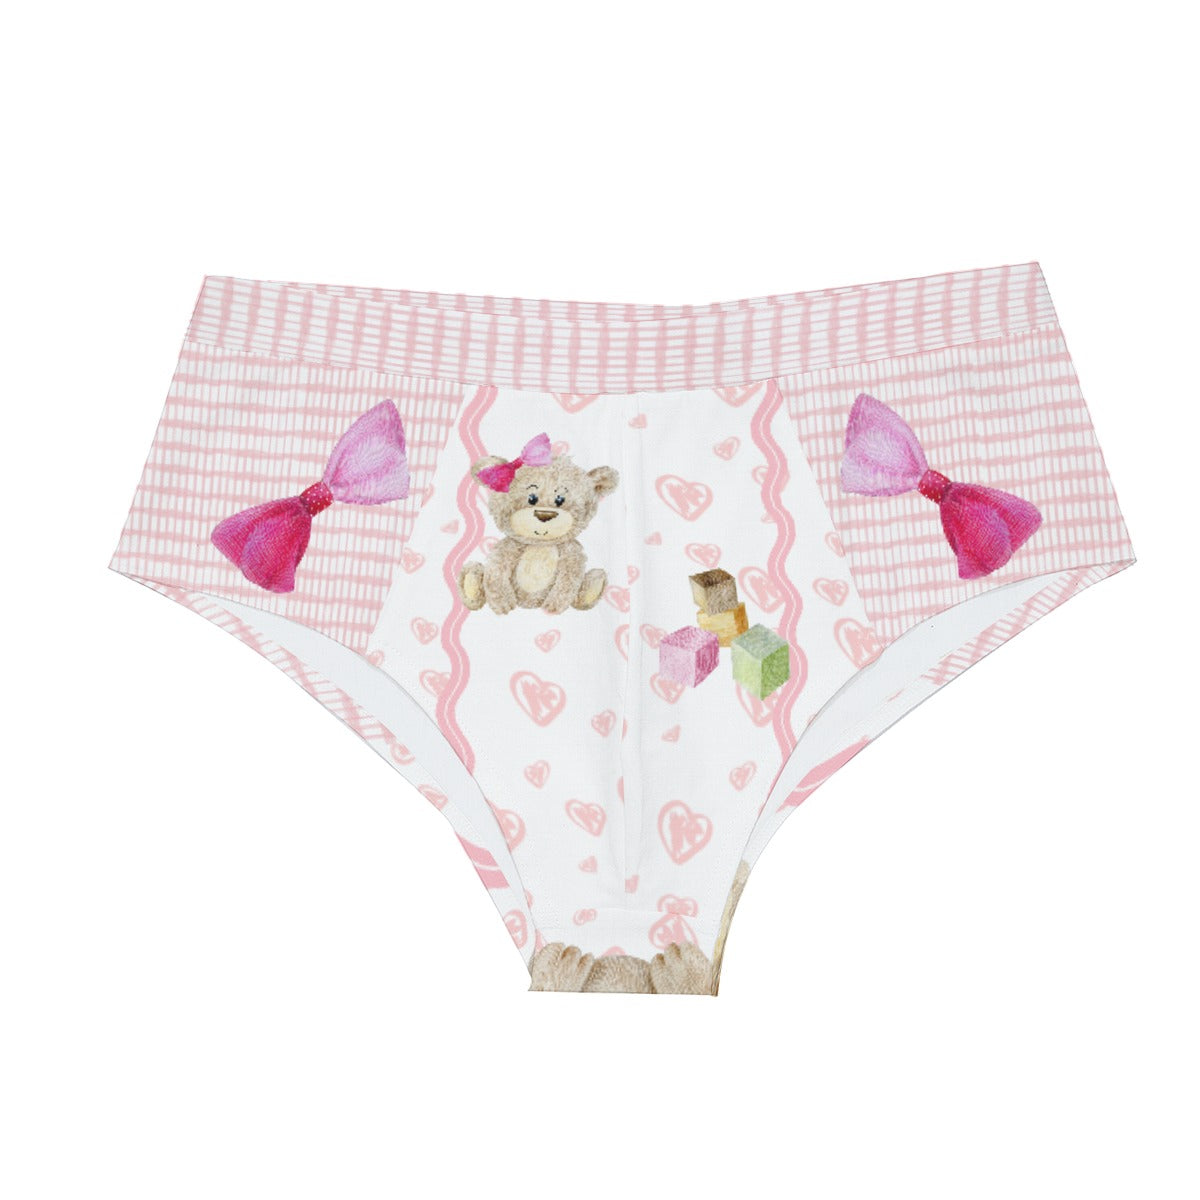 Snuggly Pink Teddy Bears "diaper" Underwear